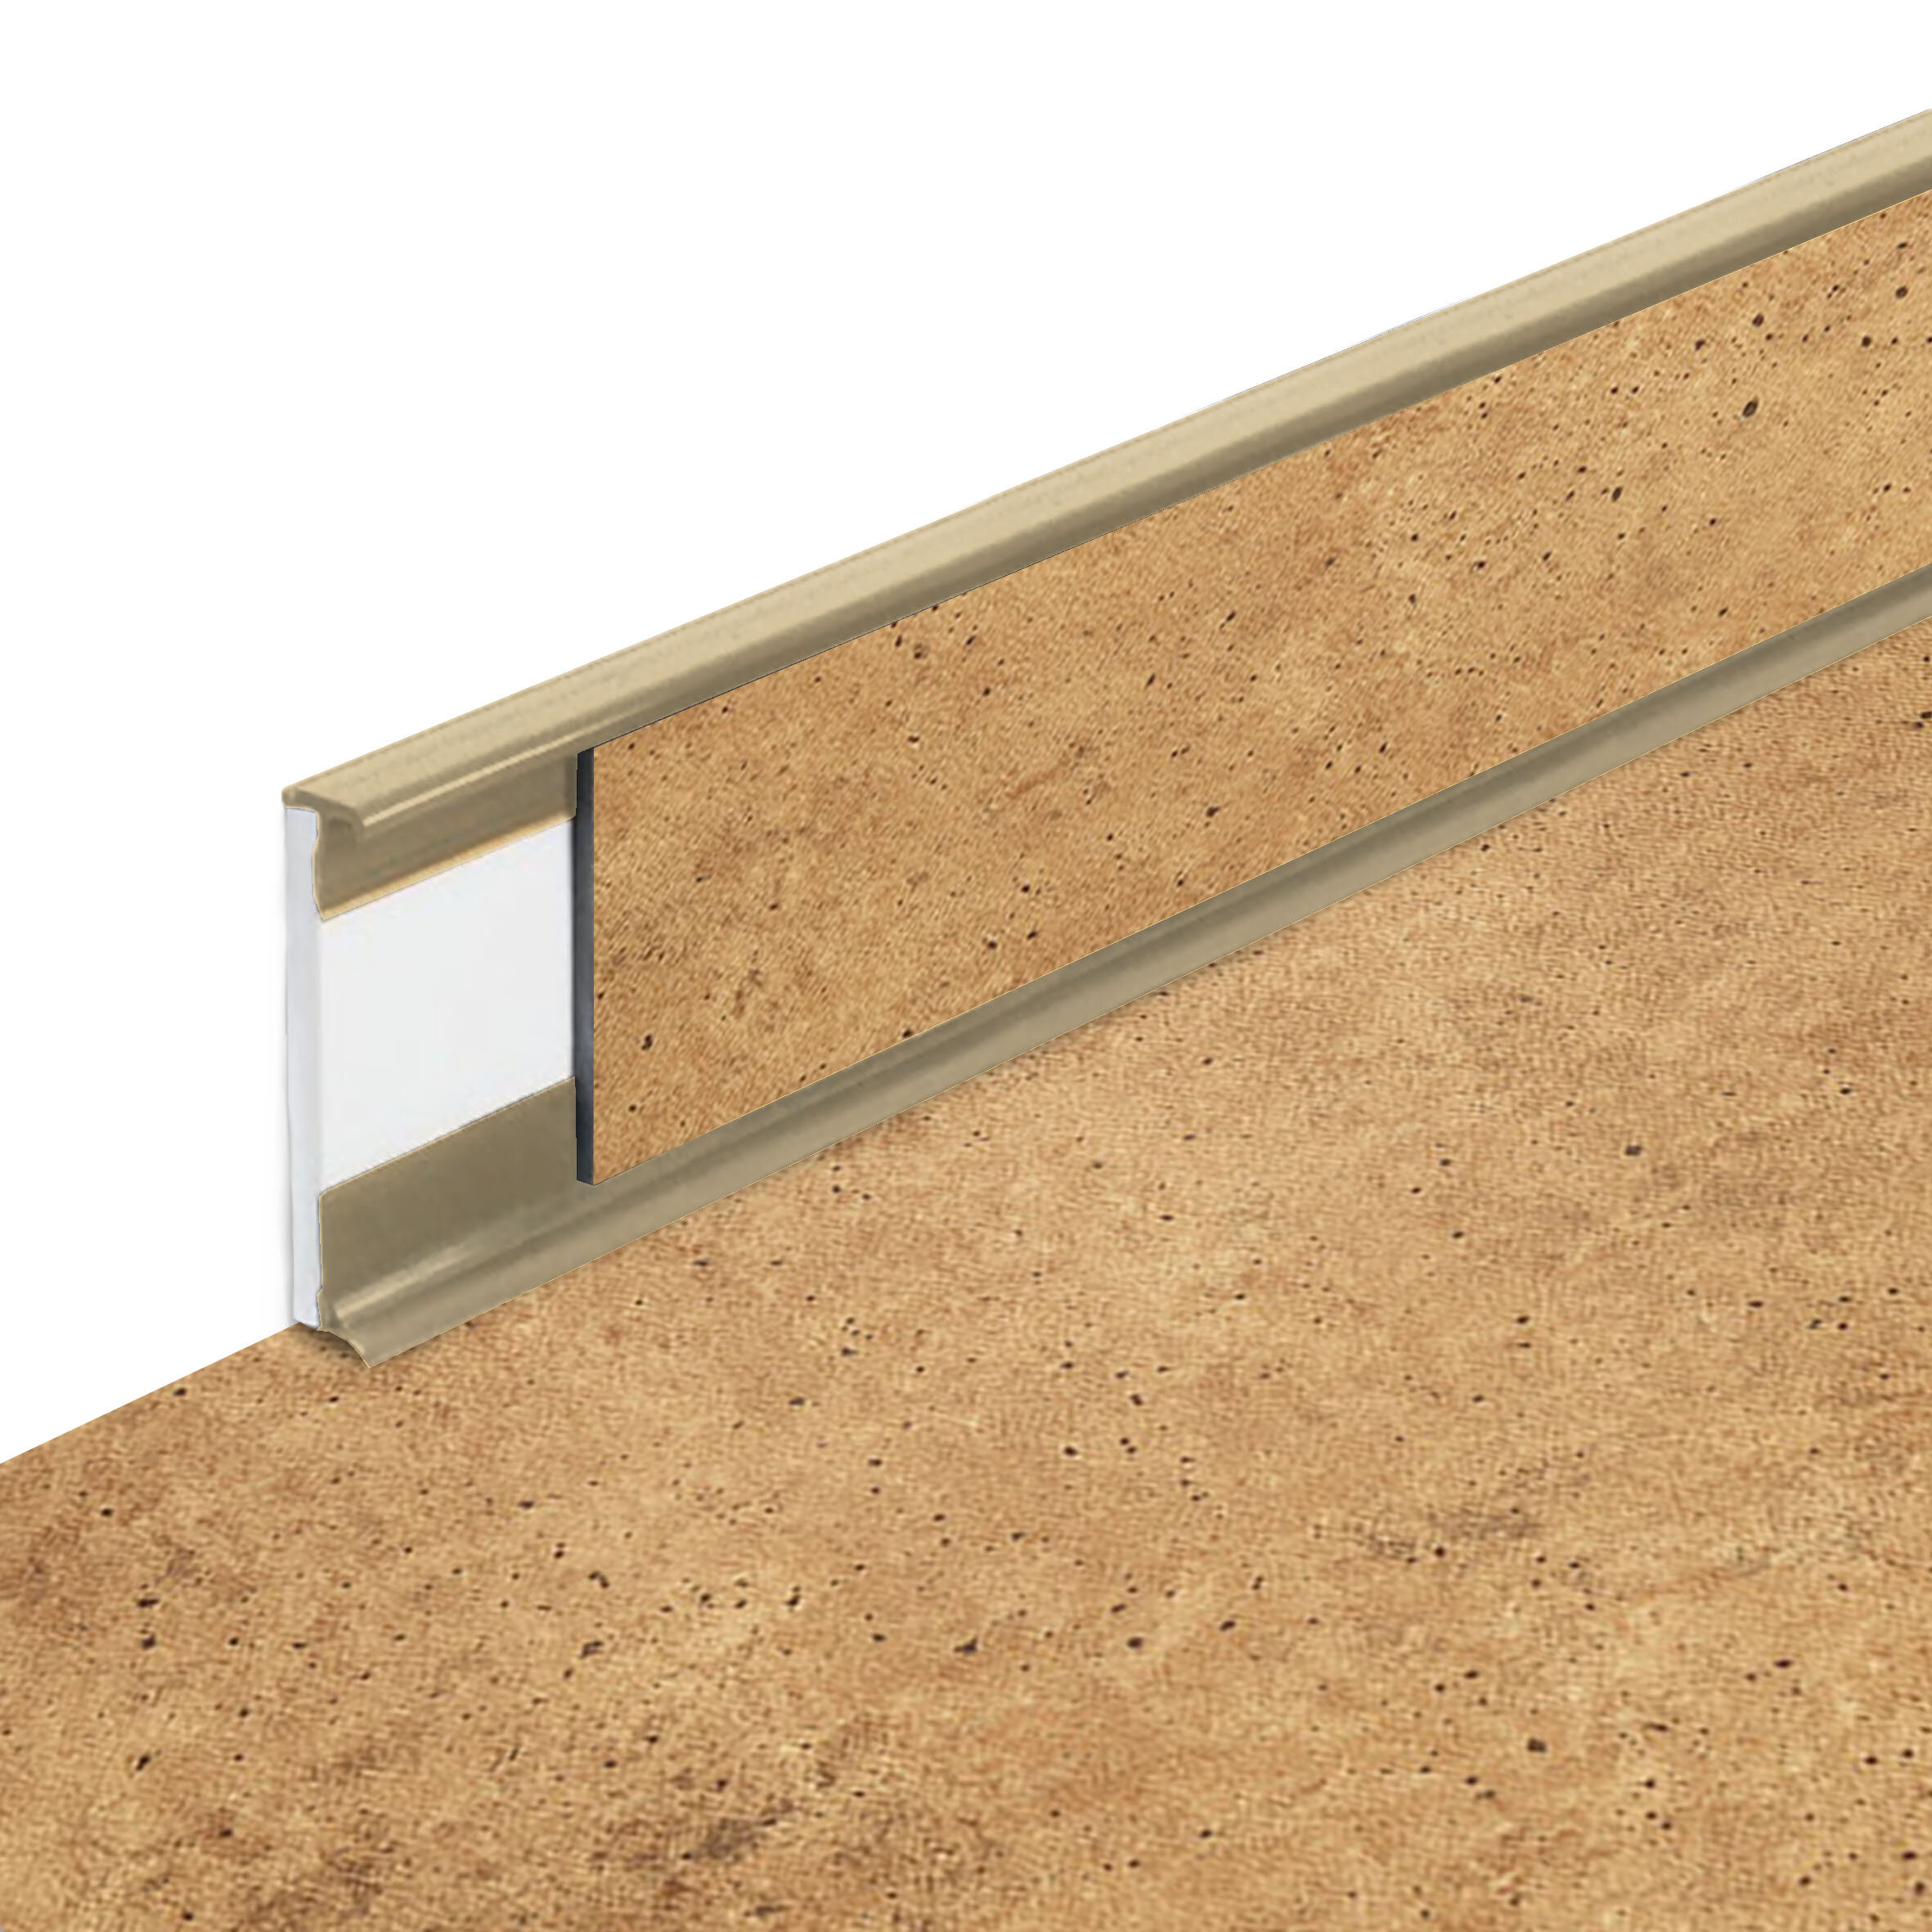 PVC vinylová soklová podlahová lišta Fortelock Business Tornes Mars C006 Beige - délka 200 cm, výška 5,8 cm, tloušťka 1,2 cm